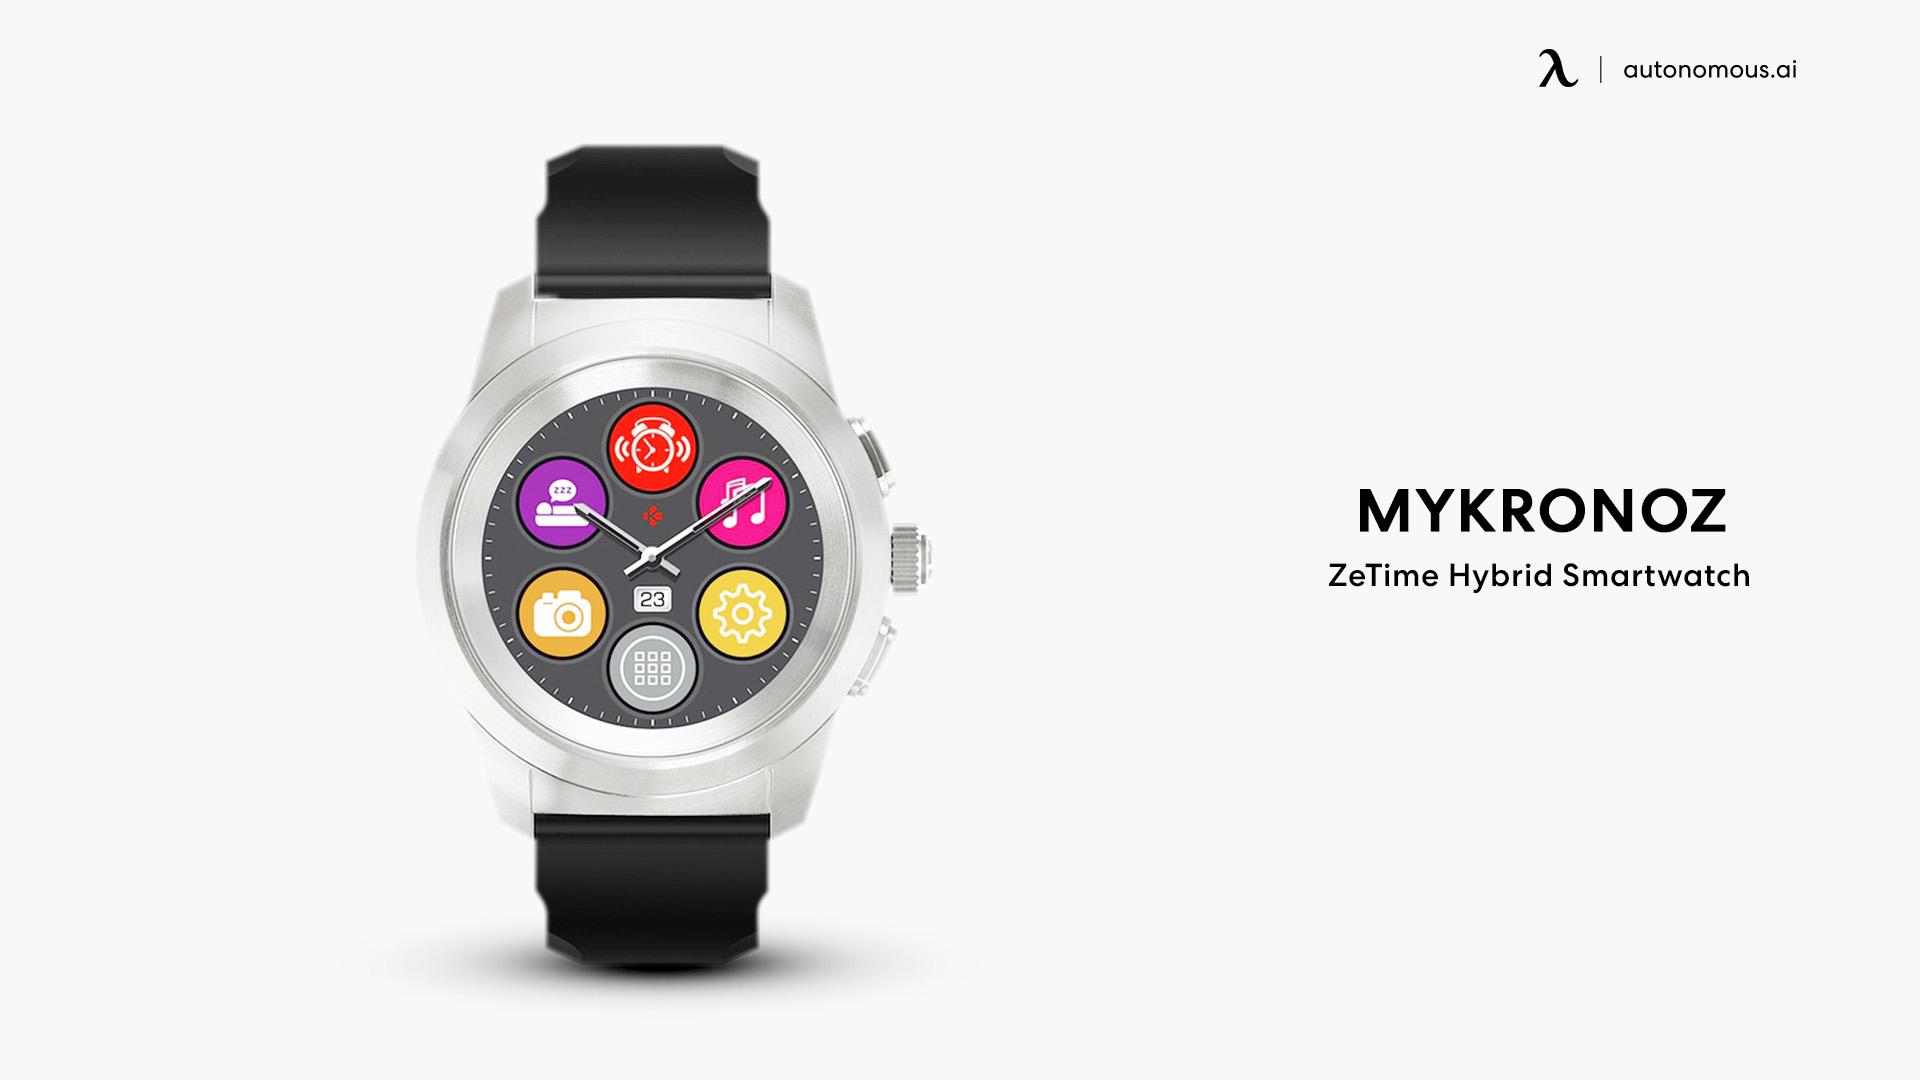 ZeTime Hybrid Smartwatch by MyKronoz